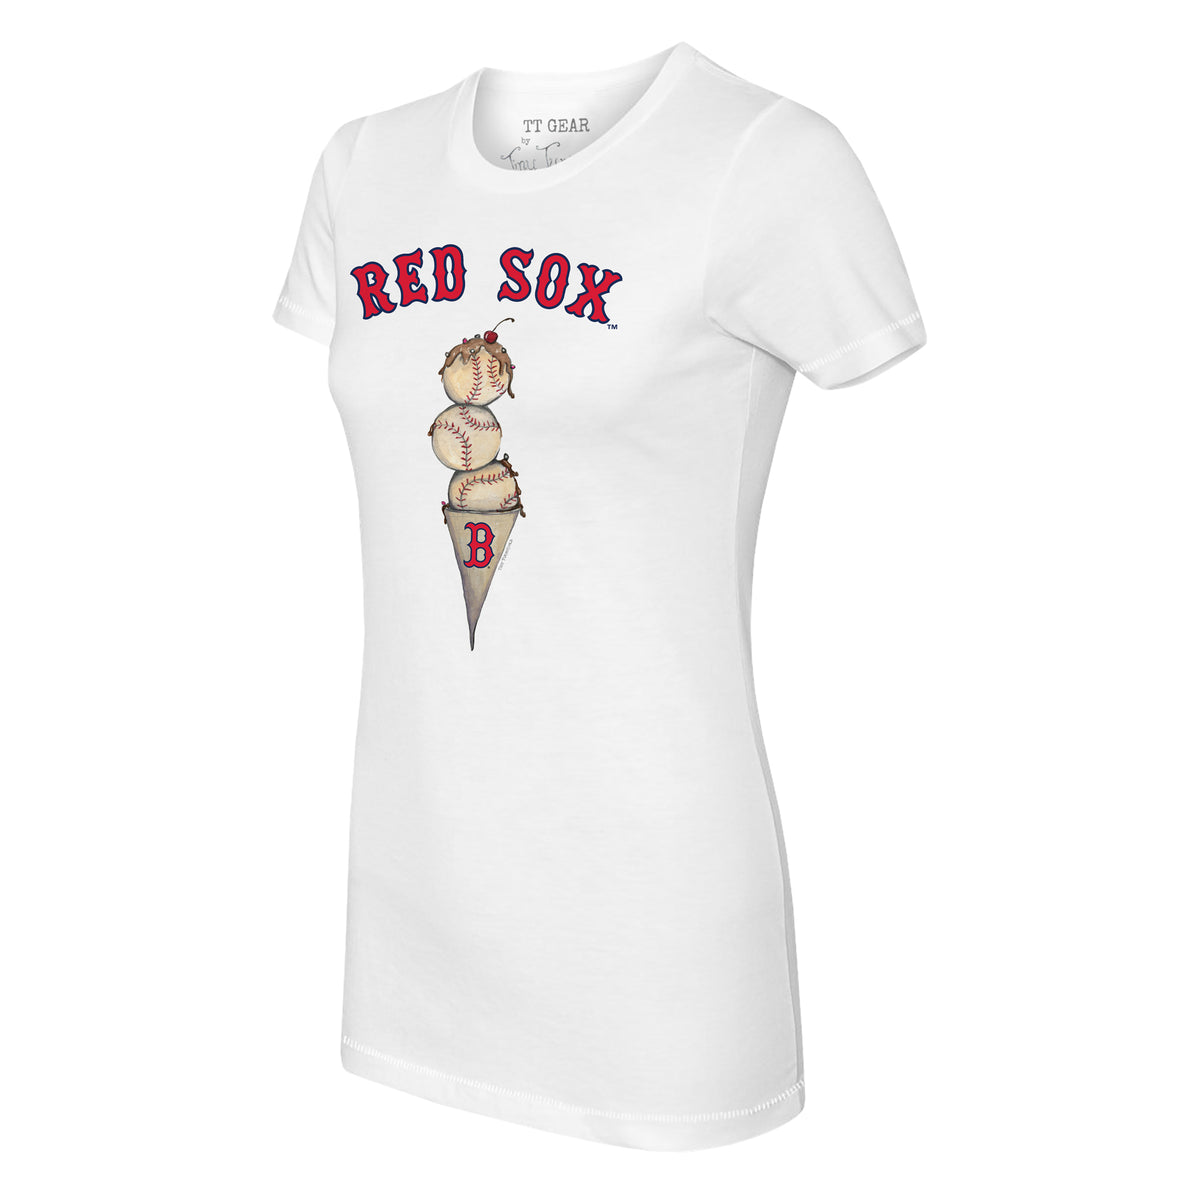 Unisex Tiny Turnip White/Red Boston Red Sox Stitched Baseball 3/4-Sleeve Raglan T-Shirt Size: Extra Small